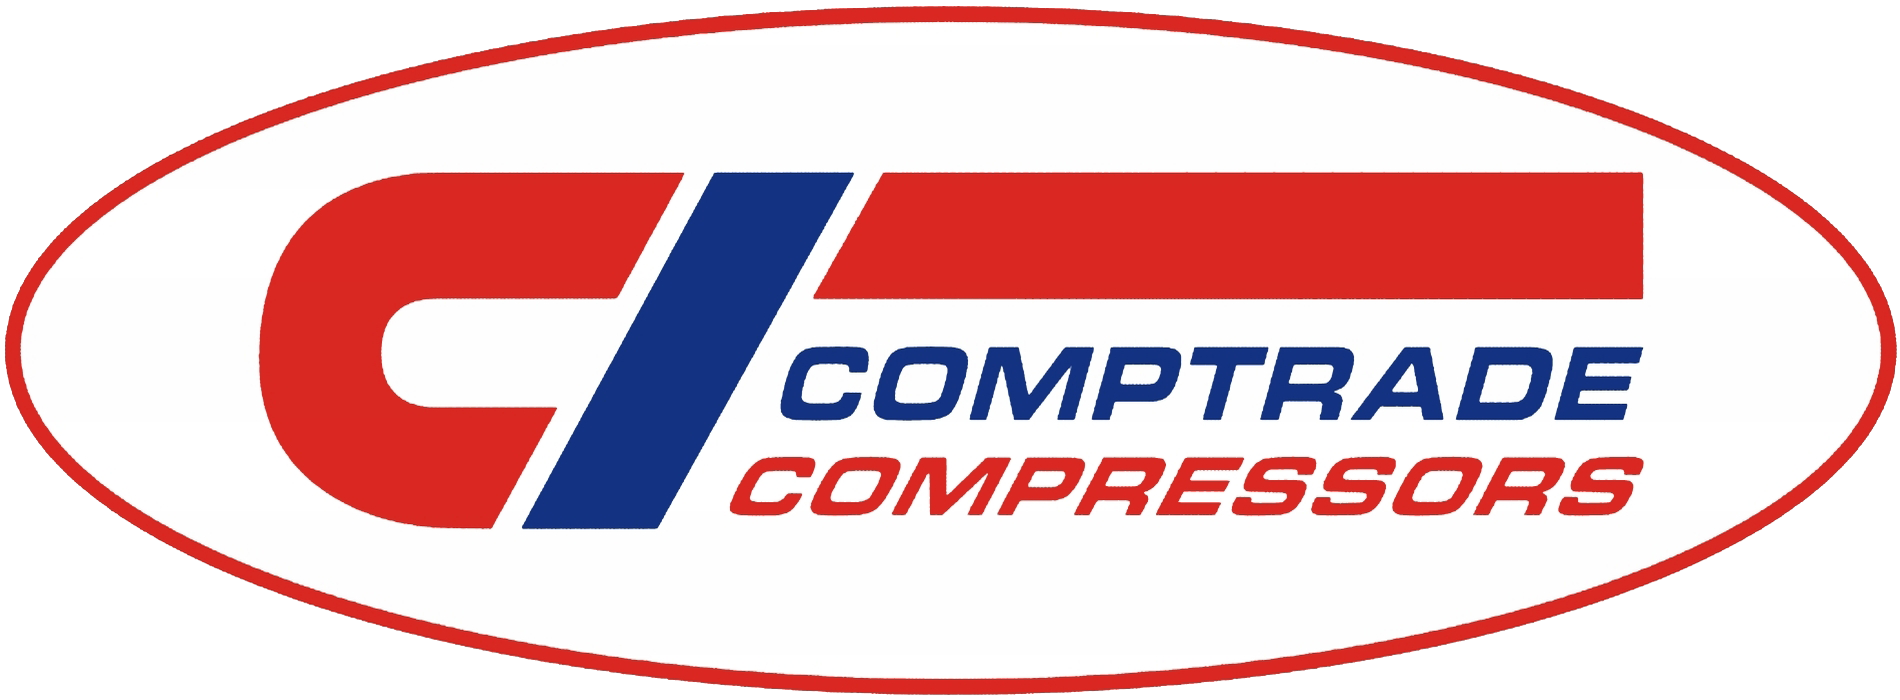 comptrade logo 1900x700 Freigestellt